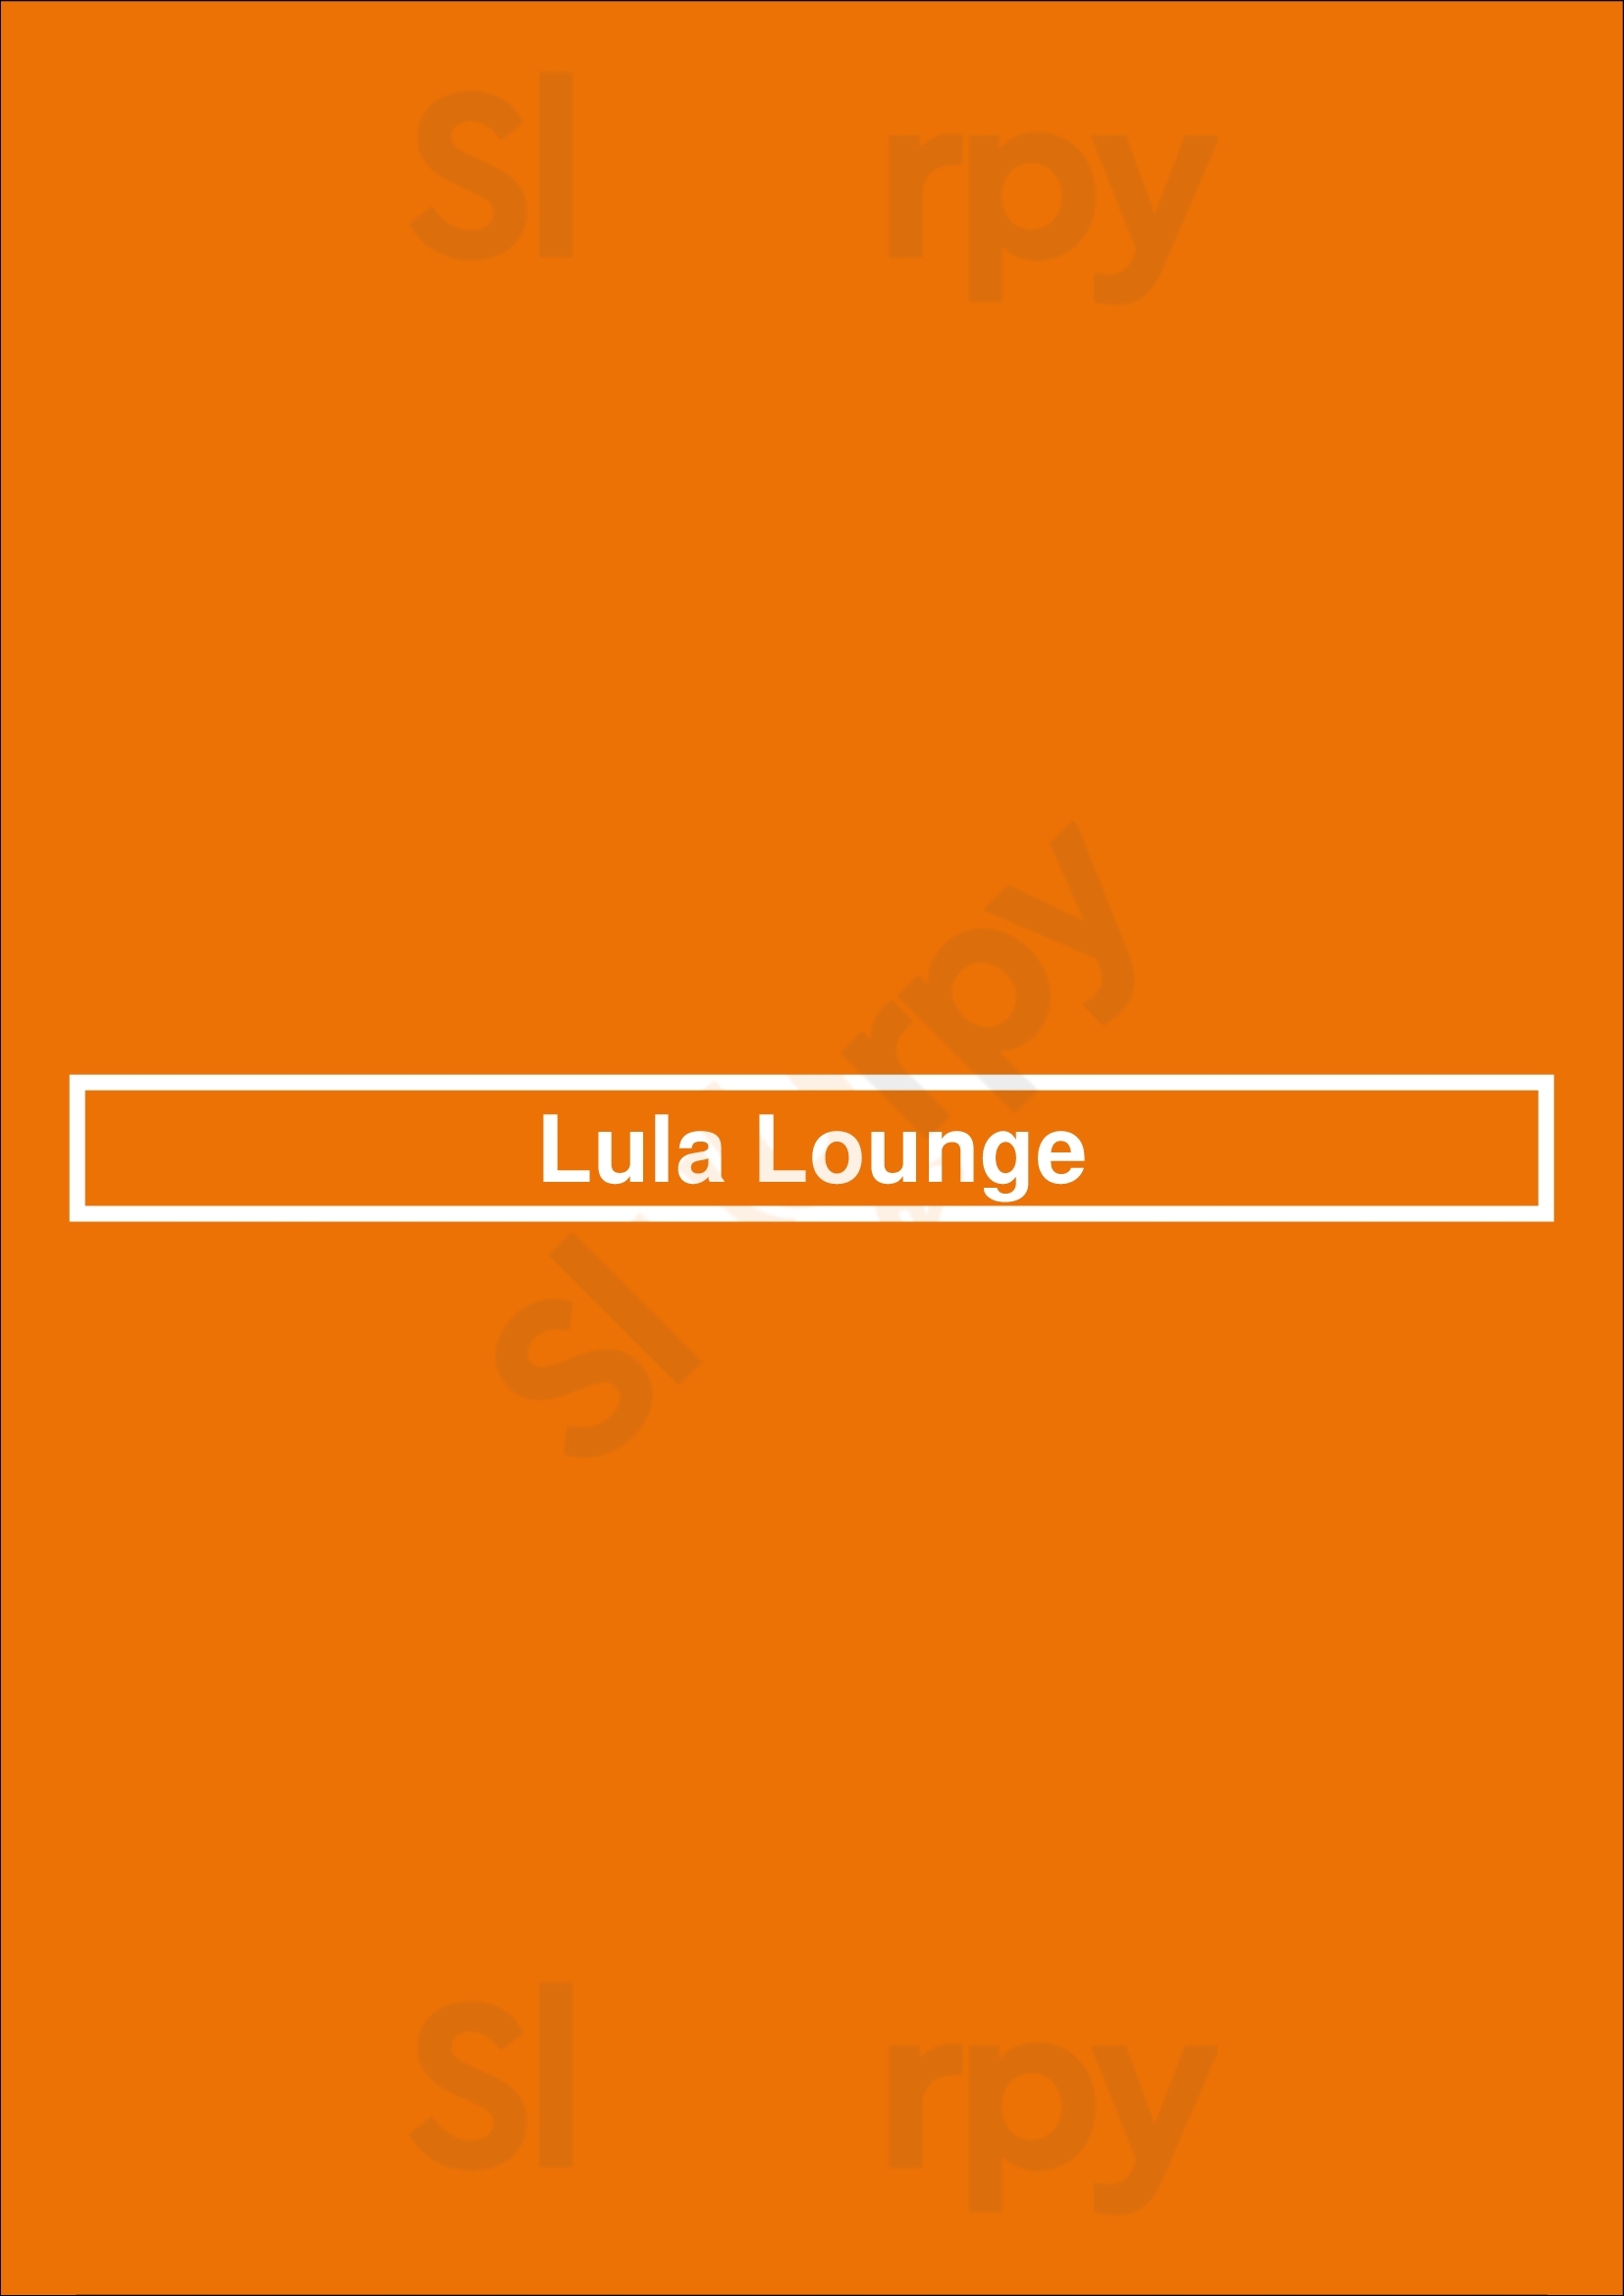 Lula Lounge Toronto Menu - 1